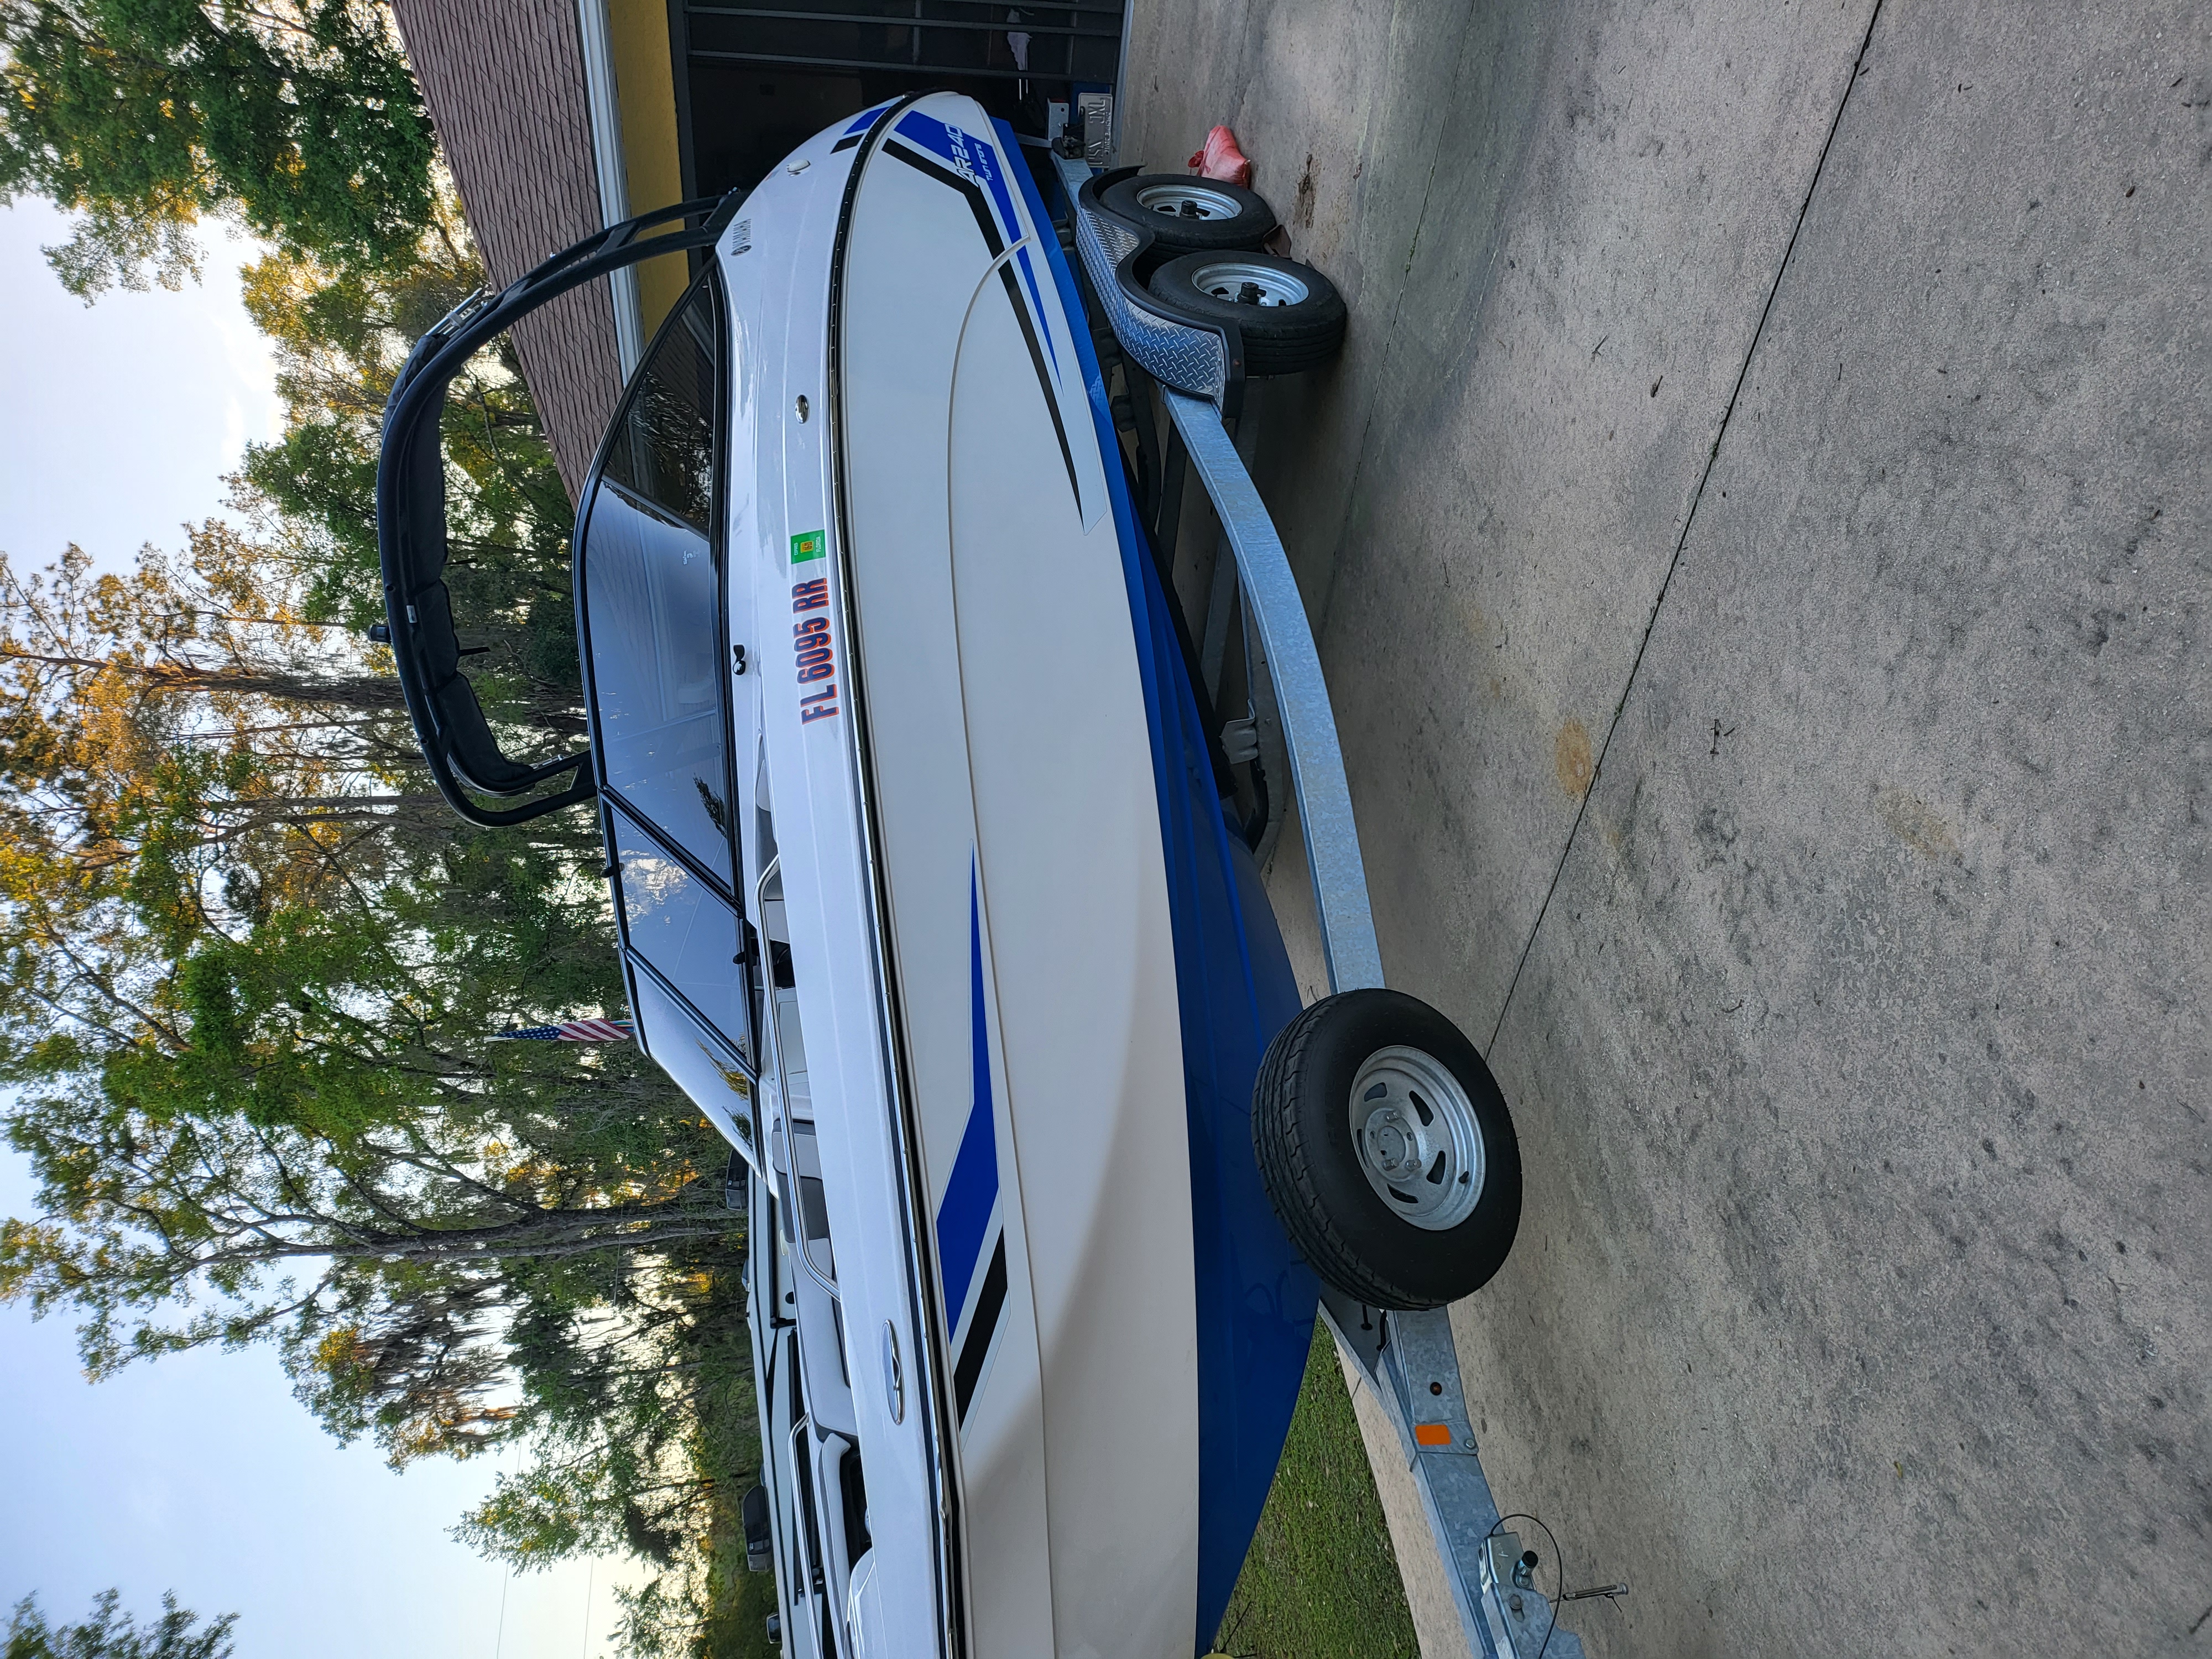 2018 Yamaha Ar240 Power boat for sale in Ocala, FL - image 7 